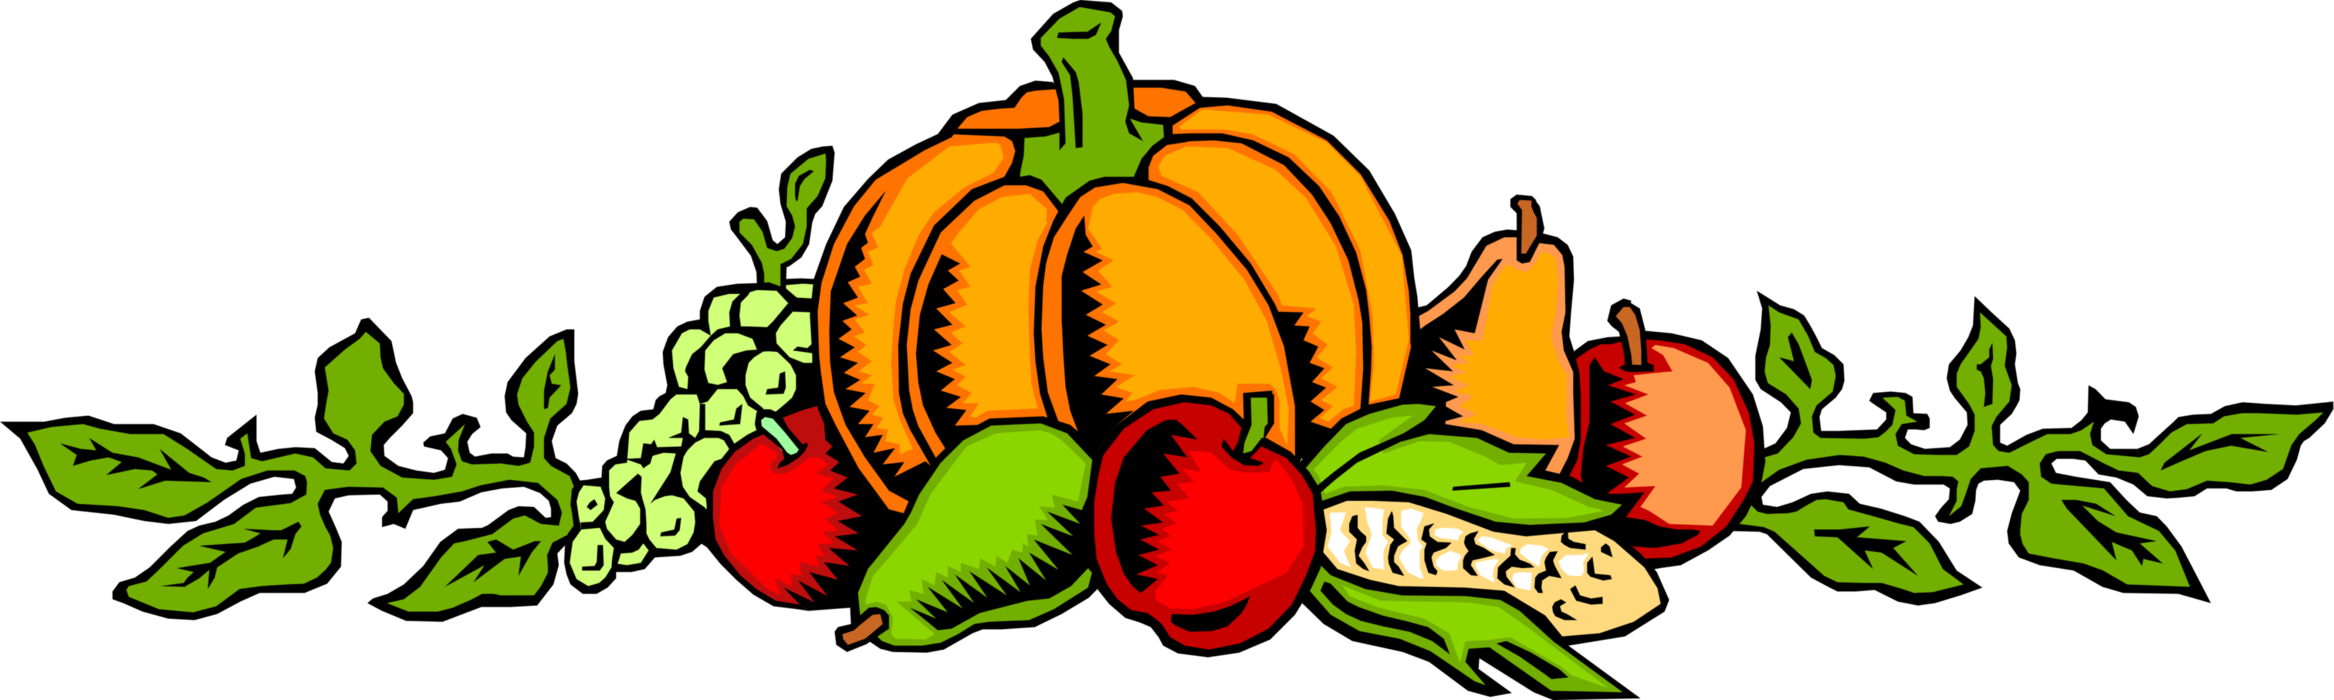 Vector Illustration of Fall or Autumn Harvest Pumpkin Background